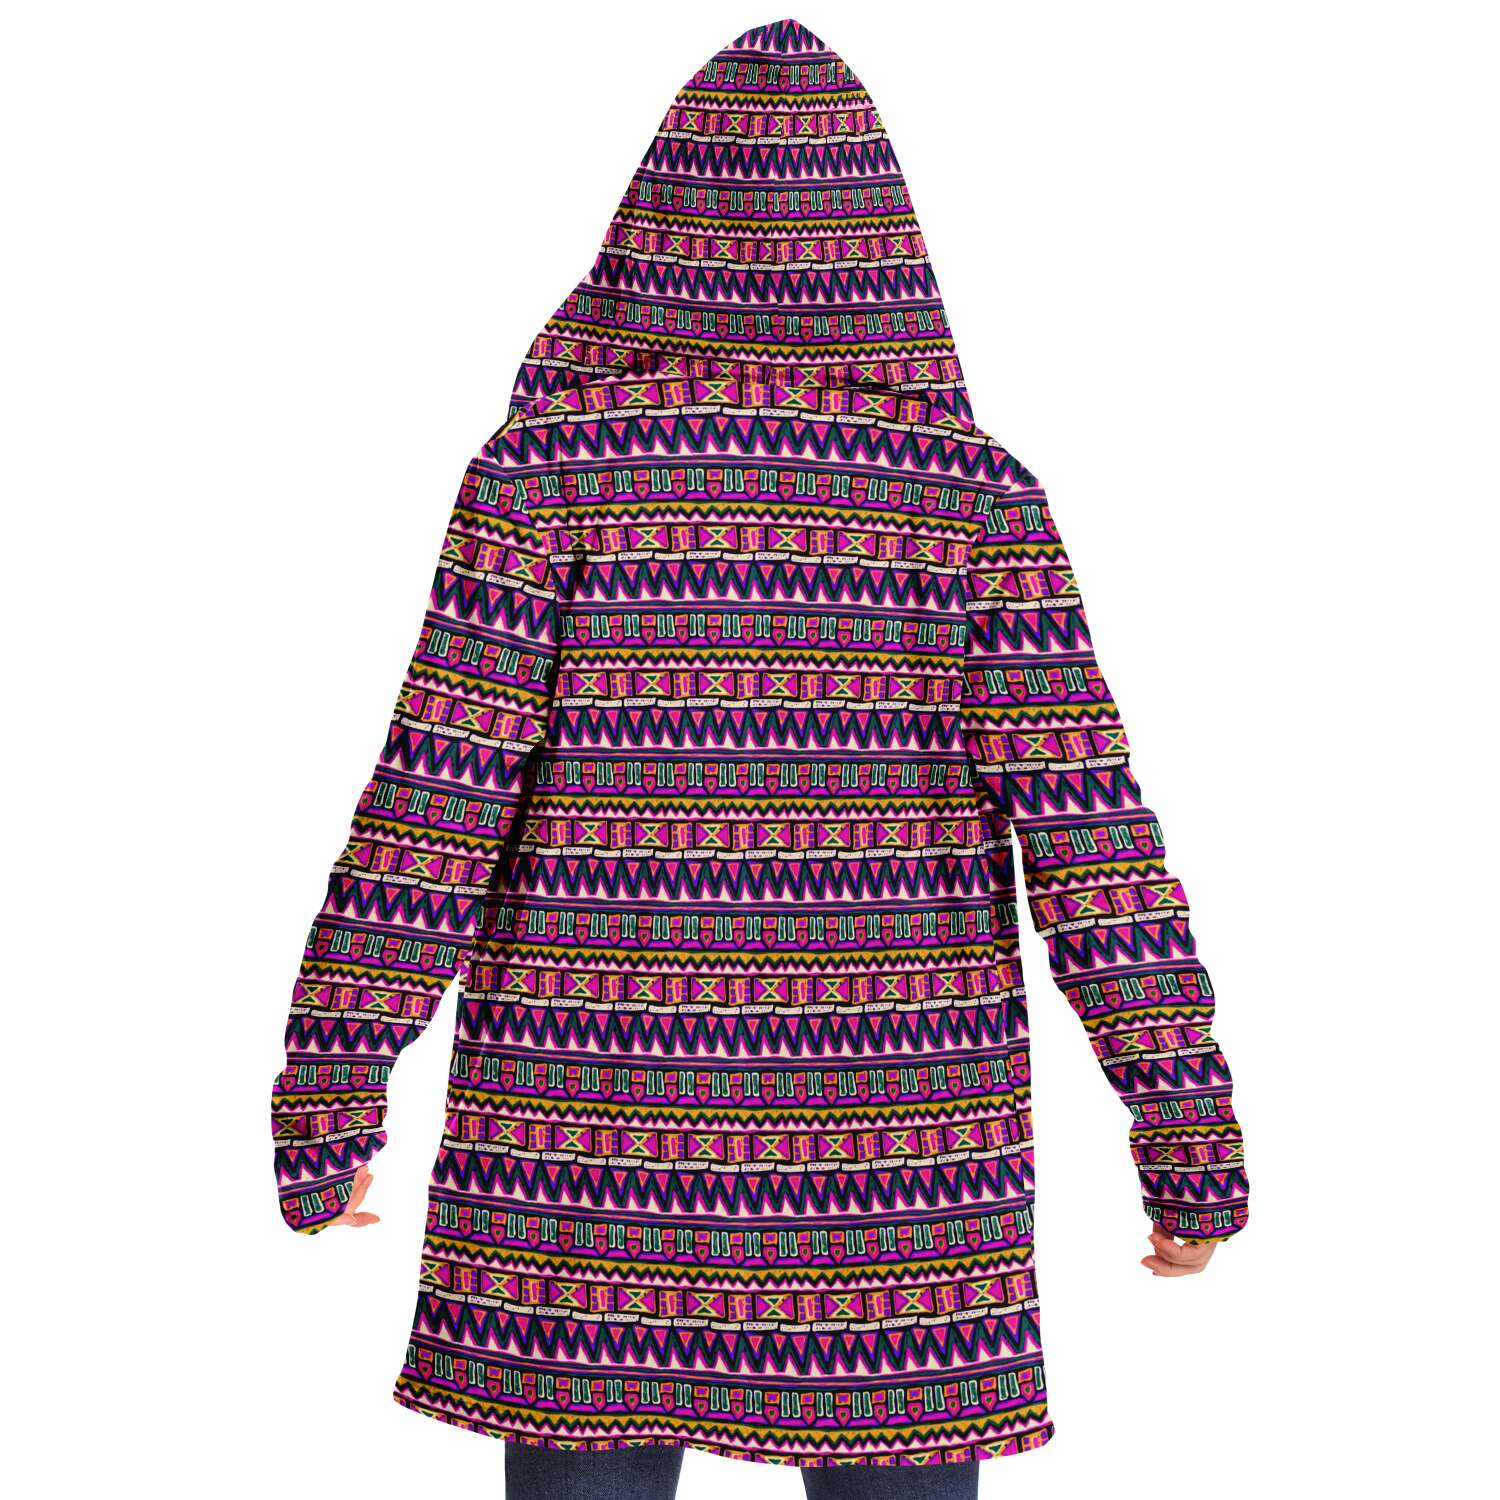 Colorful Native American Inspired Cloak